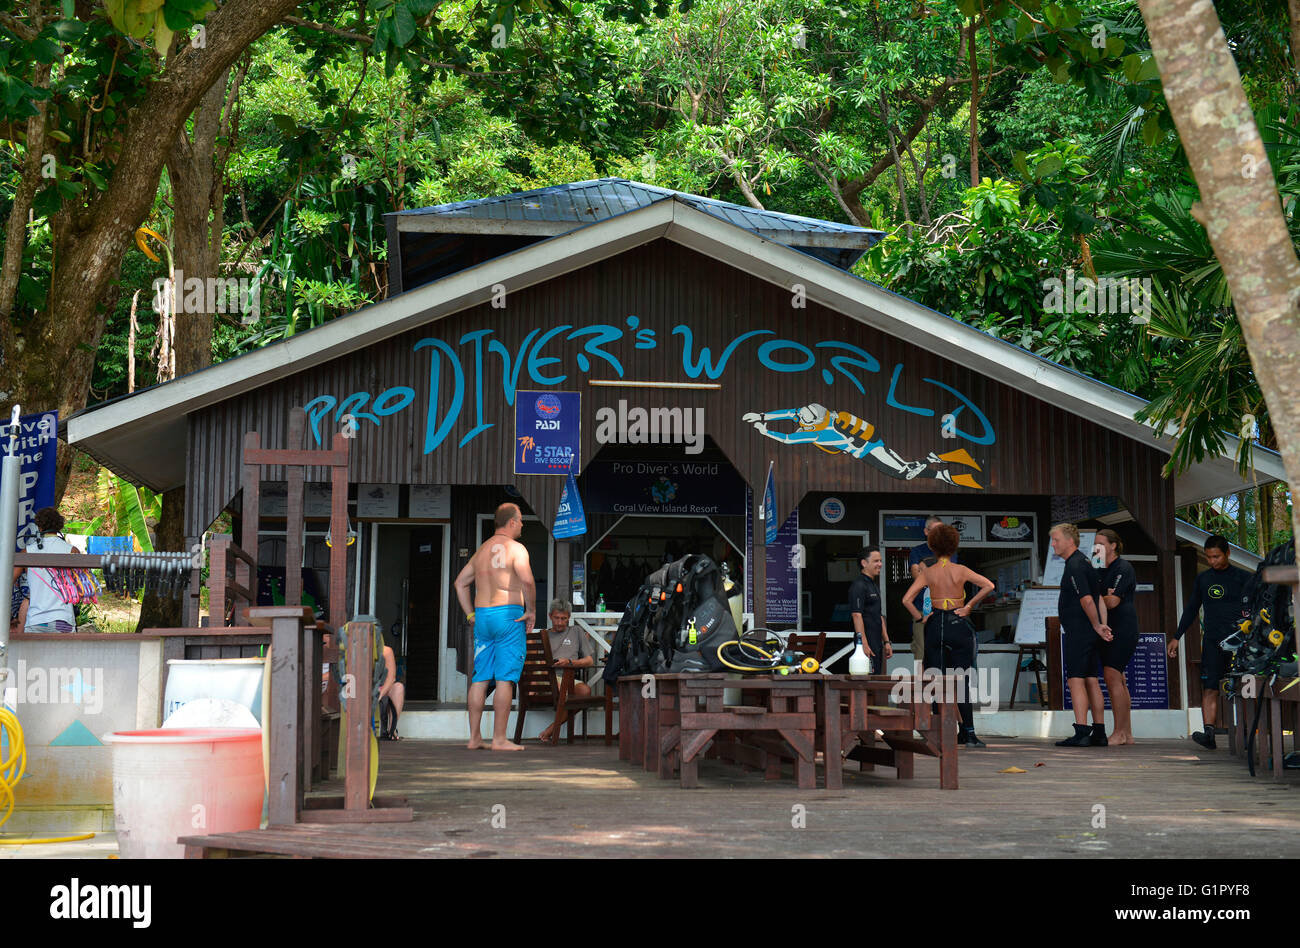 Centro de Buceo Pro Divers World, Pulau besar, las islas Perhentian, Malasia Foto de stock